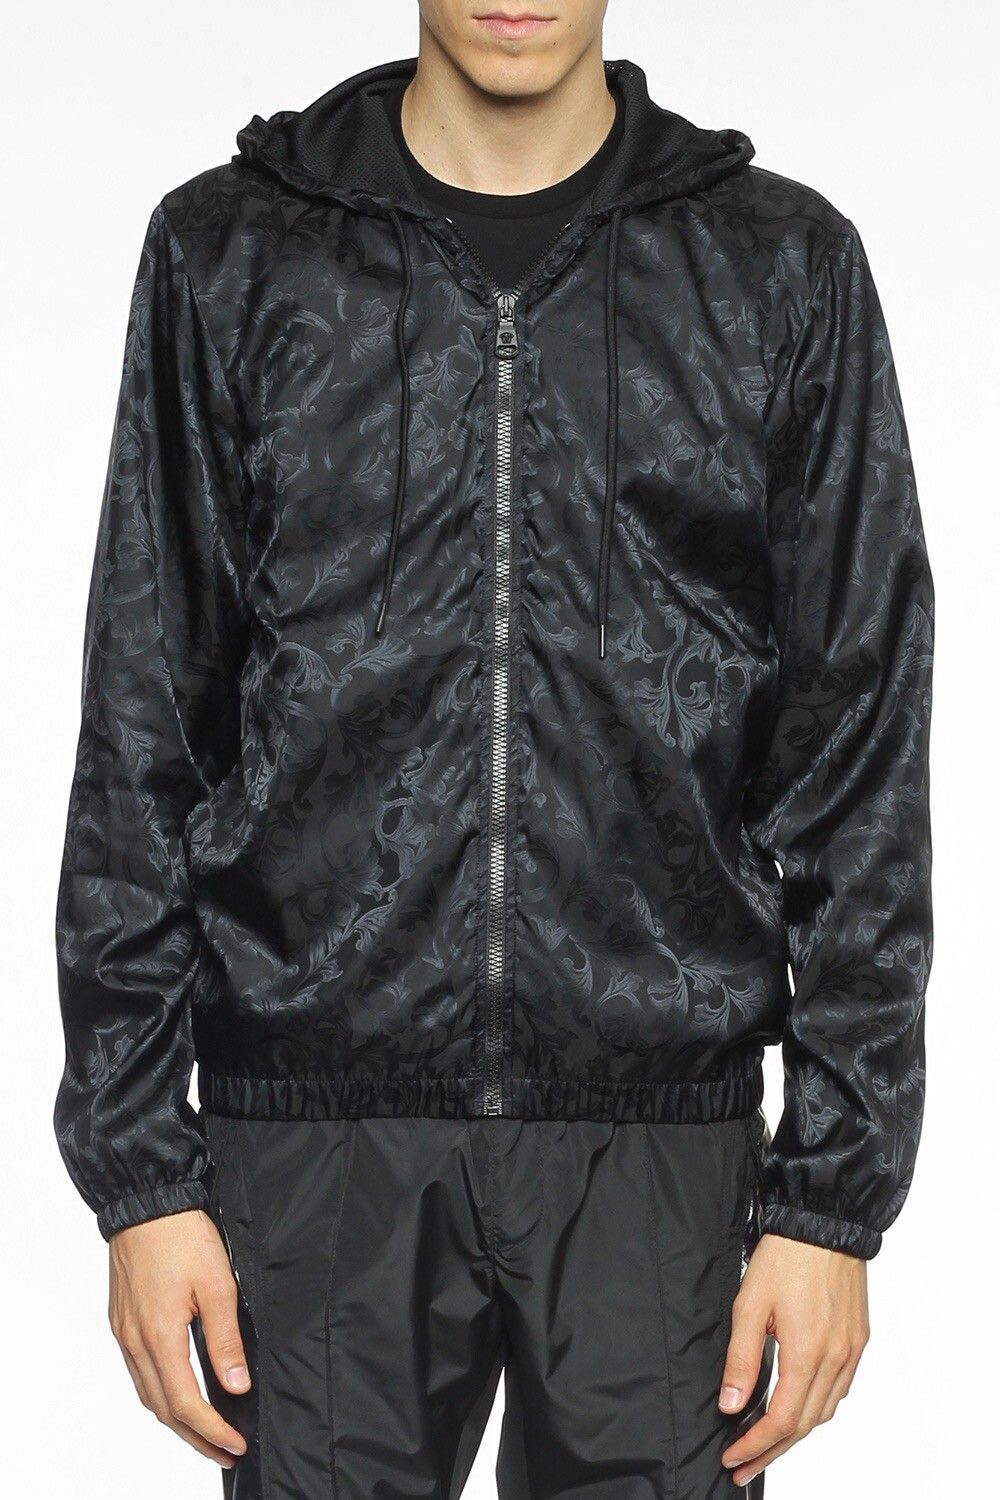 Versace Versace Rain Jacket/Versace Nylon Barocco jacket | Grailed